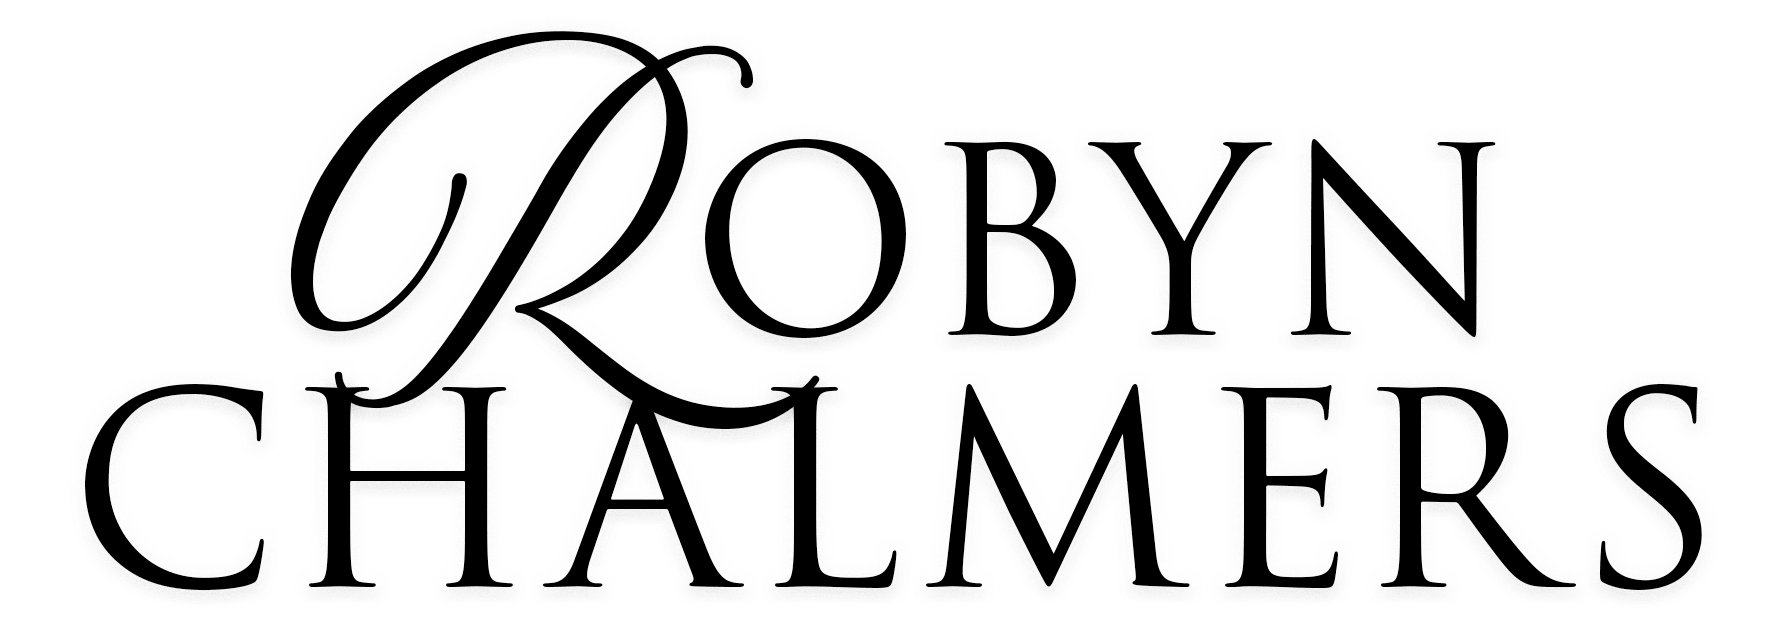 Robyn Chalmers - Regency Romance Author